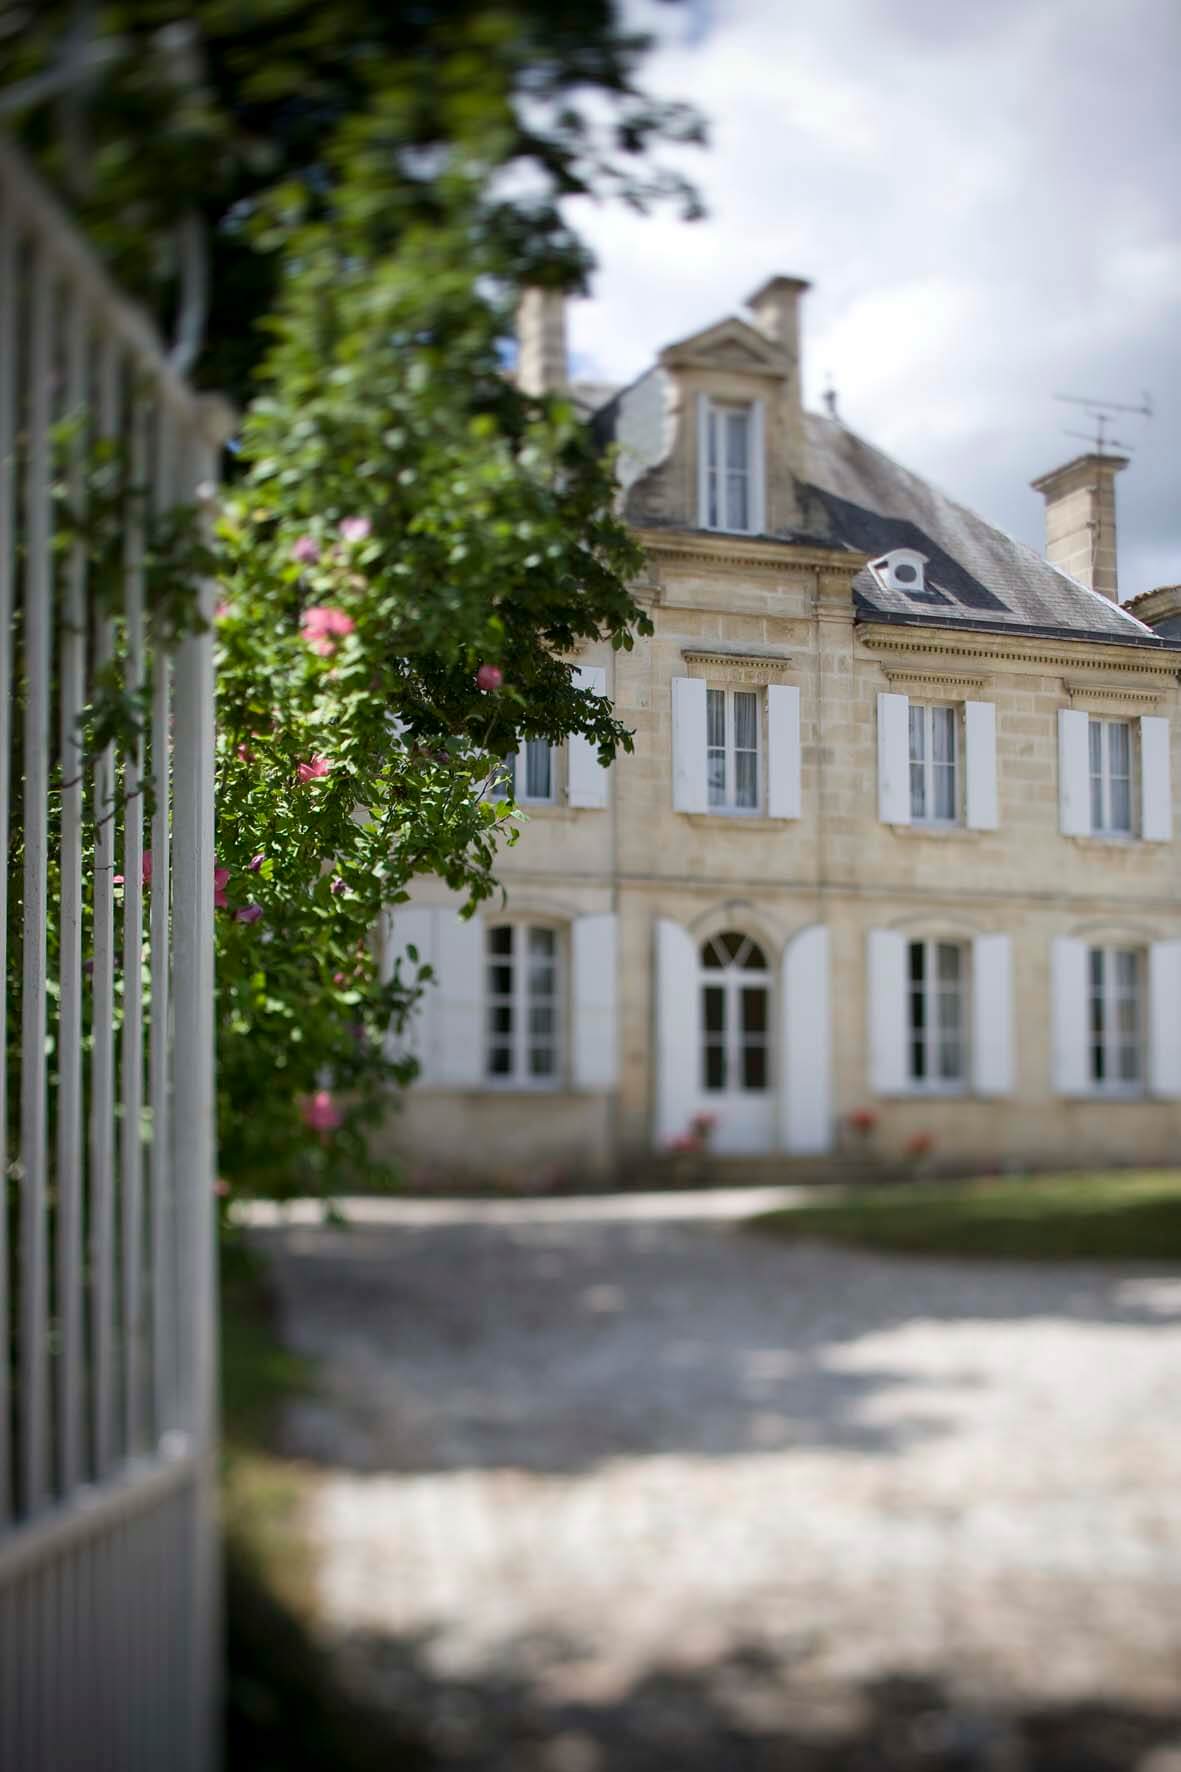 Château Cos Labory